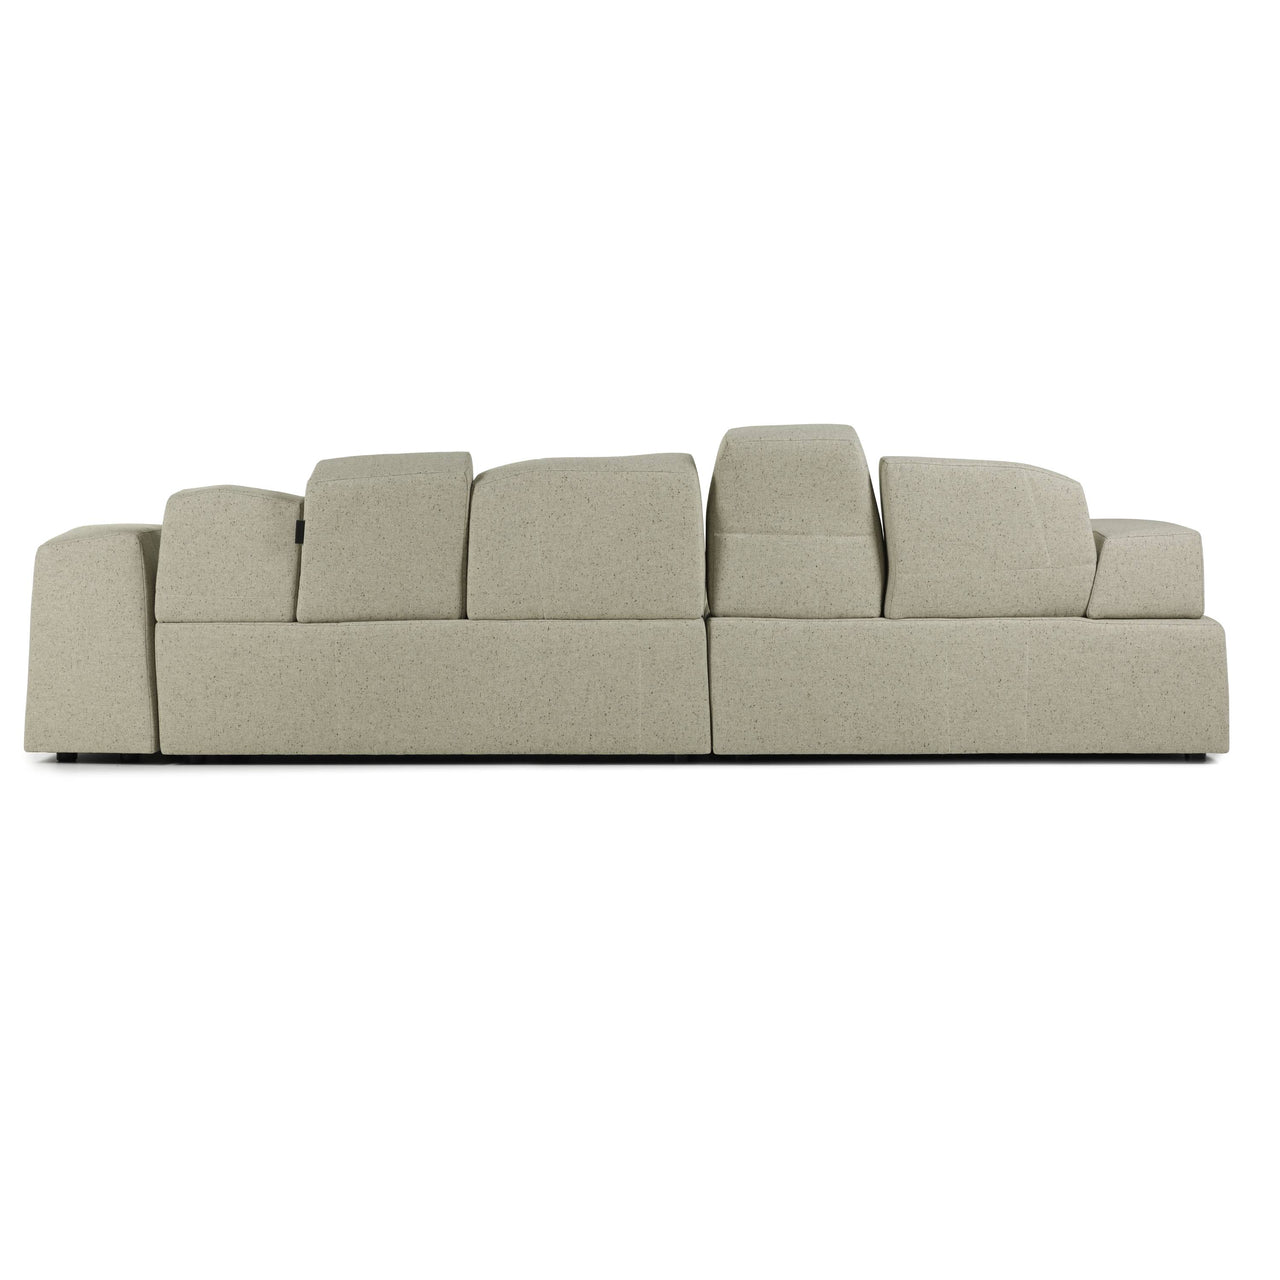 SLT Modular Sofa: Chaise Longue Left